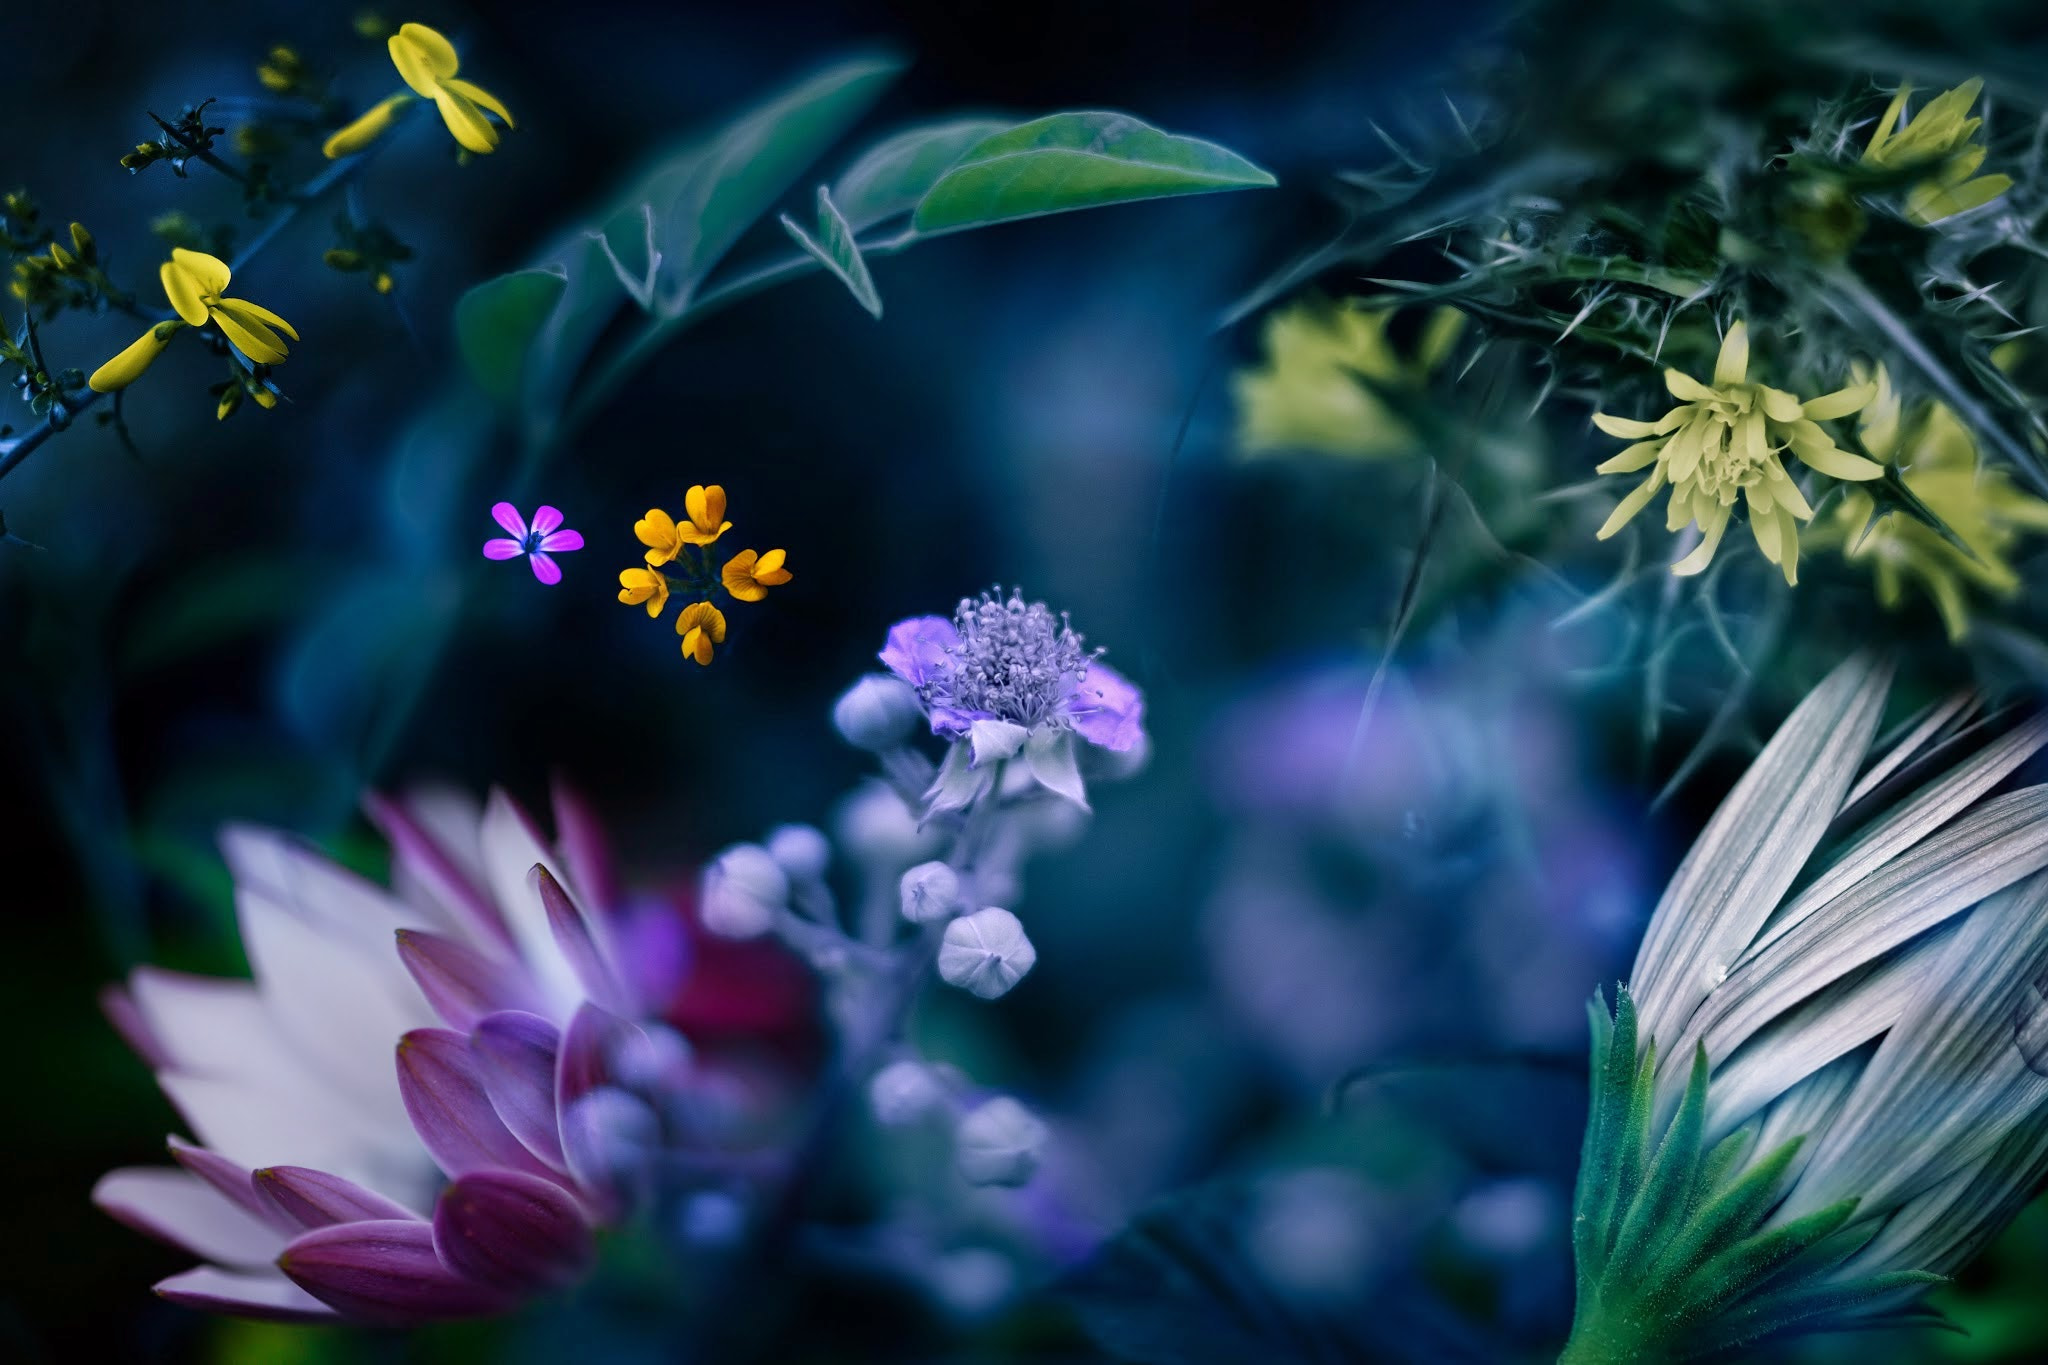 Free photo Flowers - diversity in macro photography